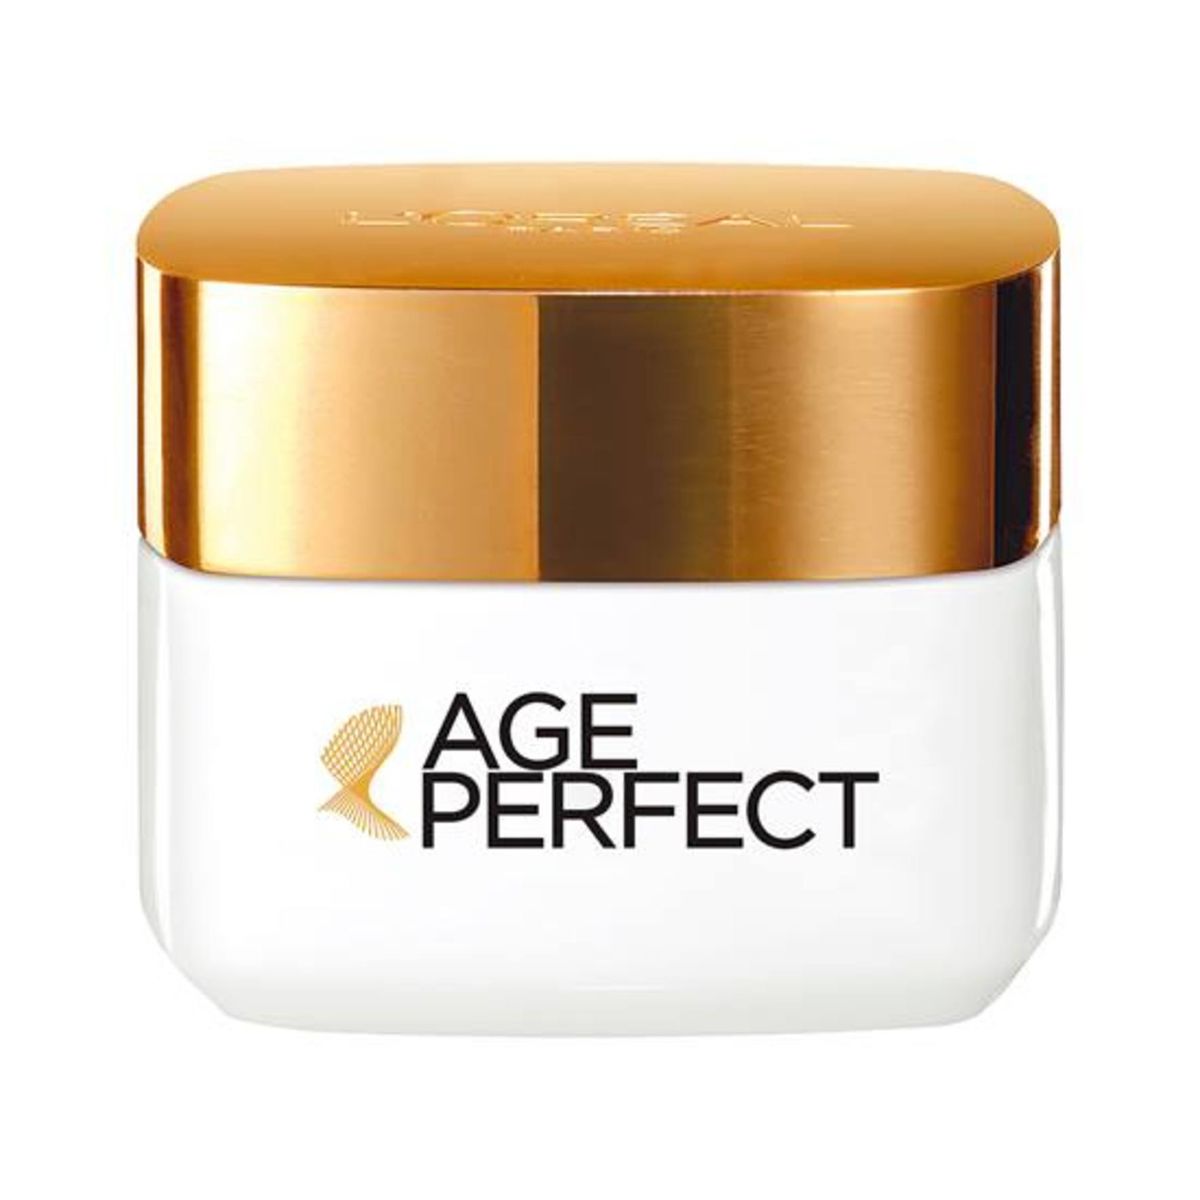 L'Oréal Age Perfect Re-hydraterend verzorging dag rijpe huid 50 ml